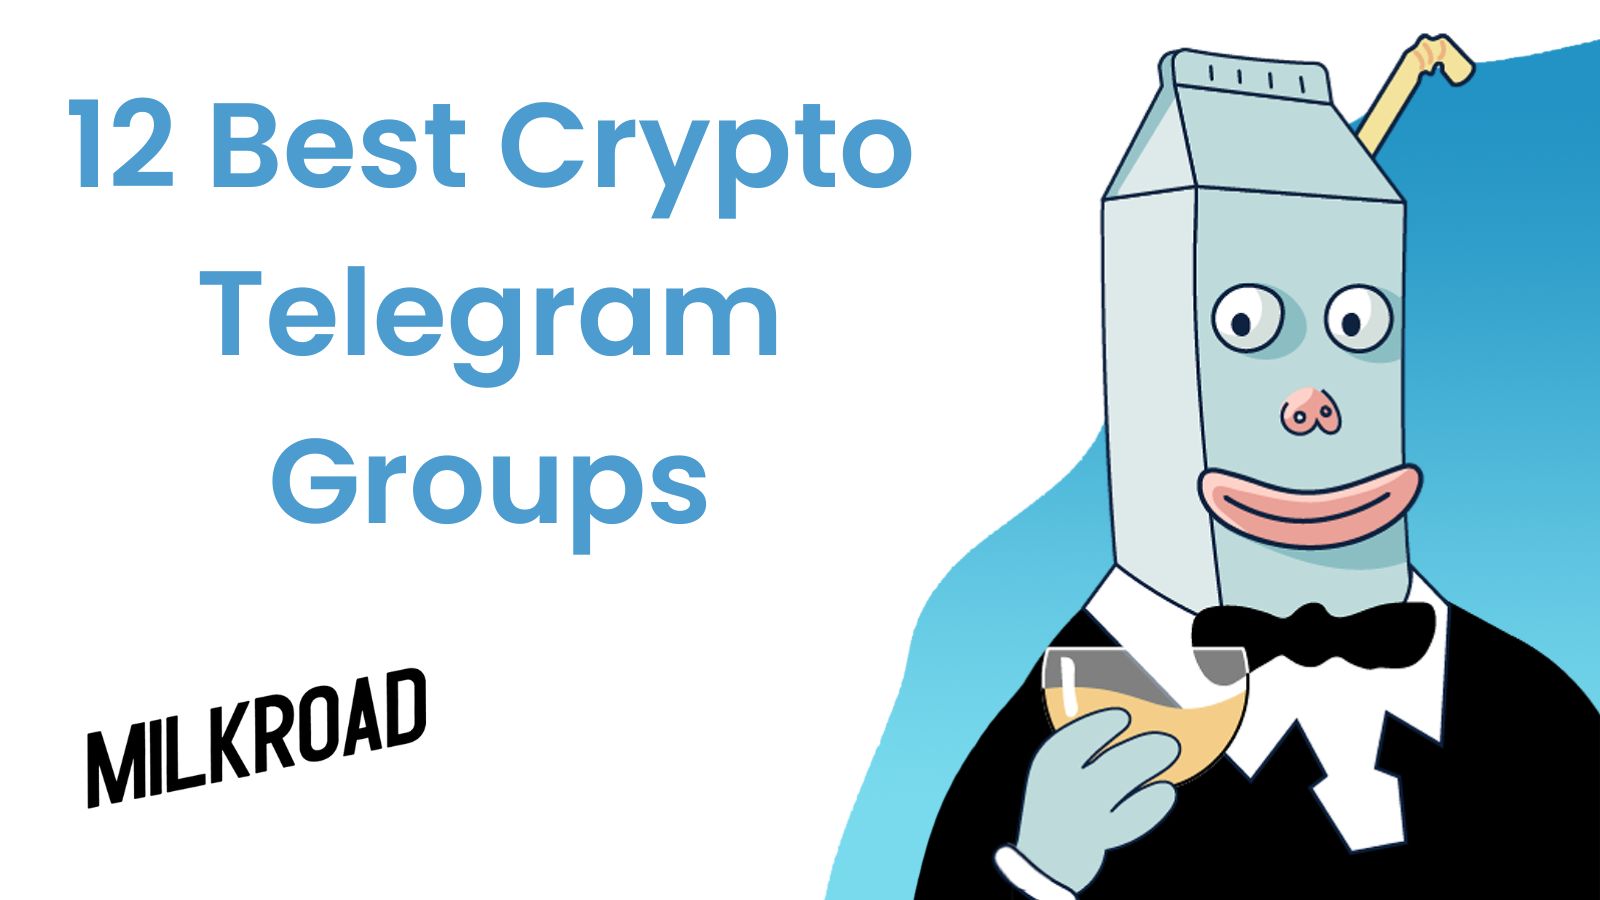 12 Best Crypto Telegram Groups